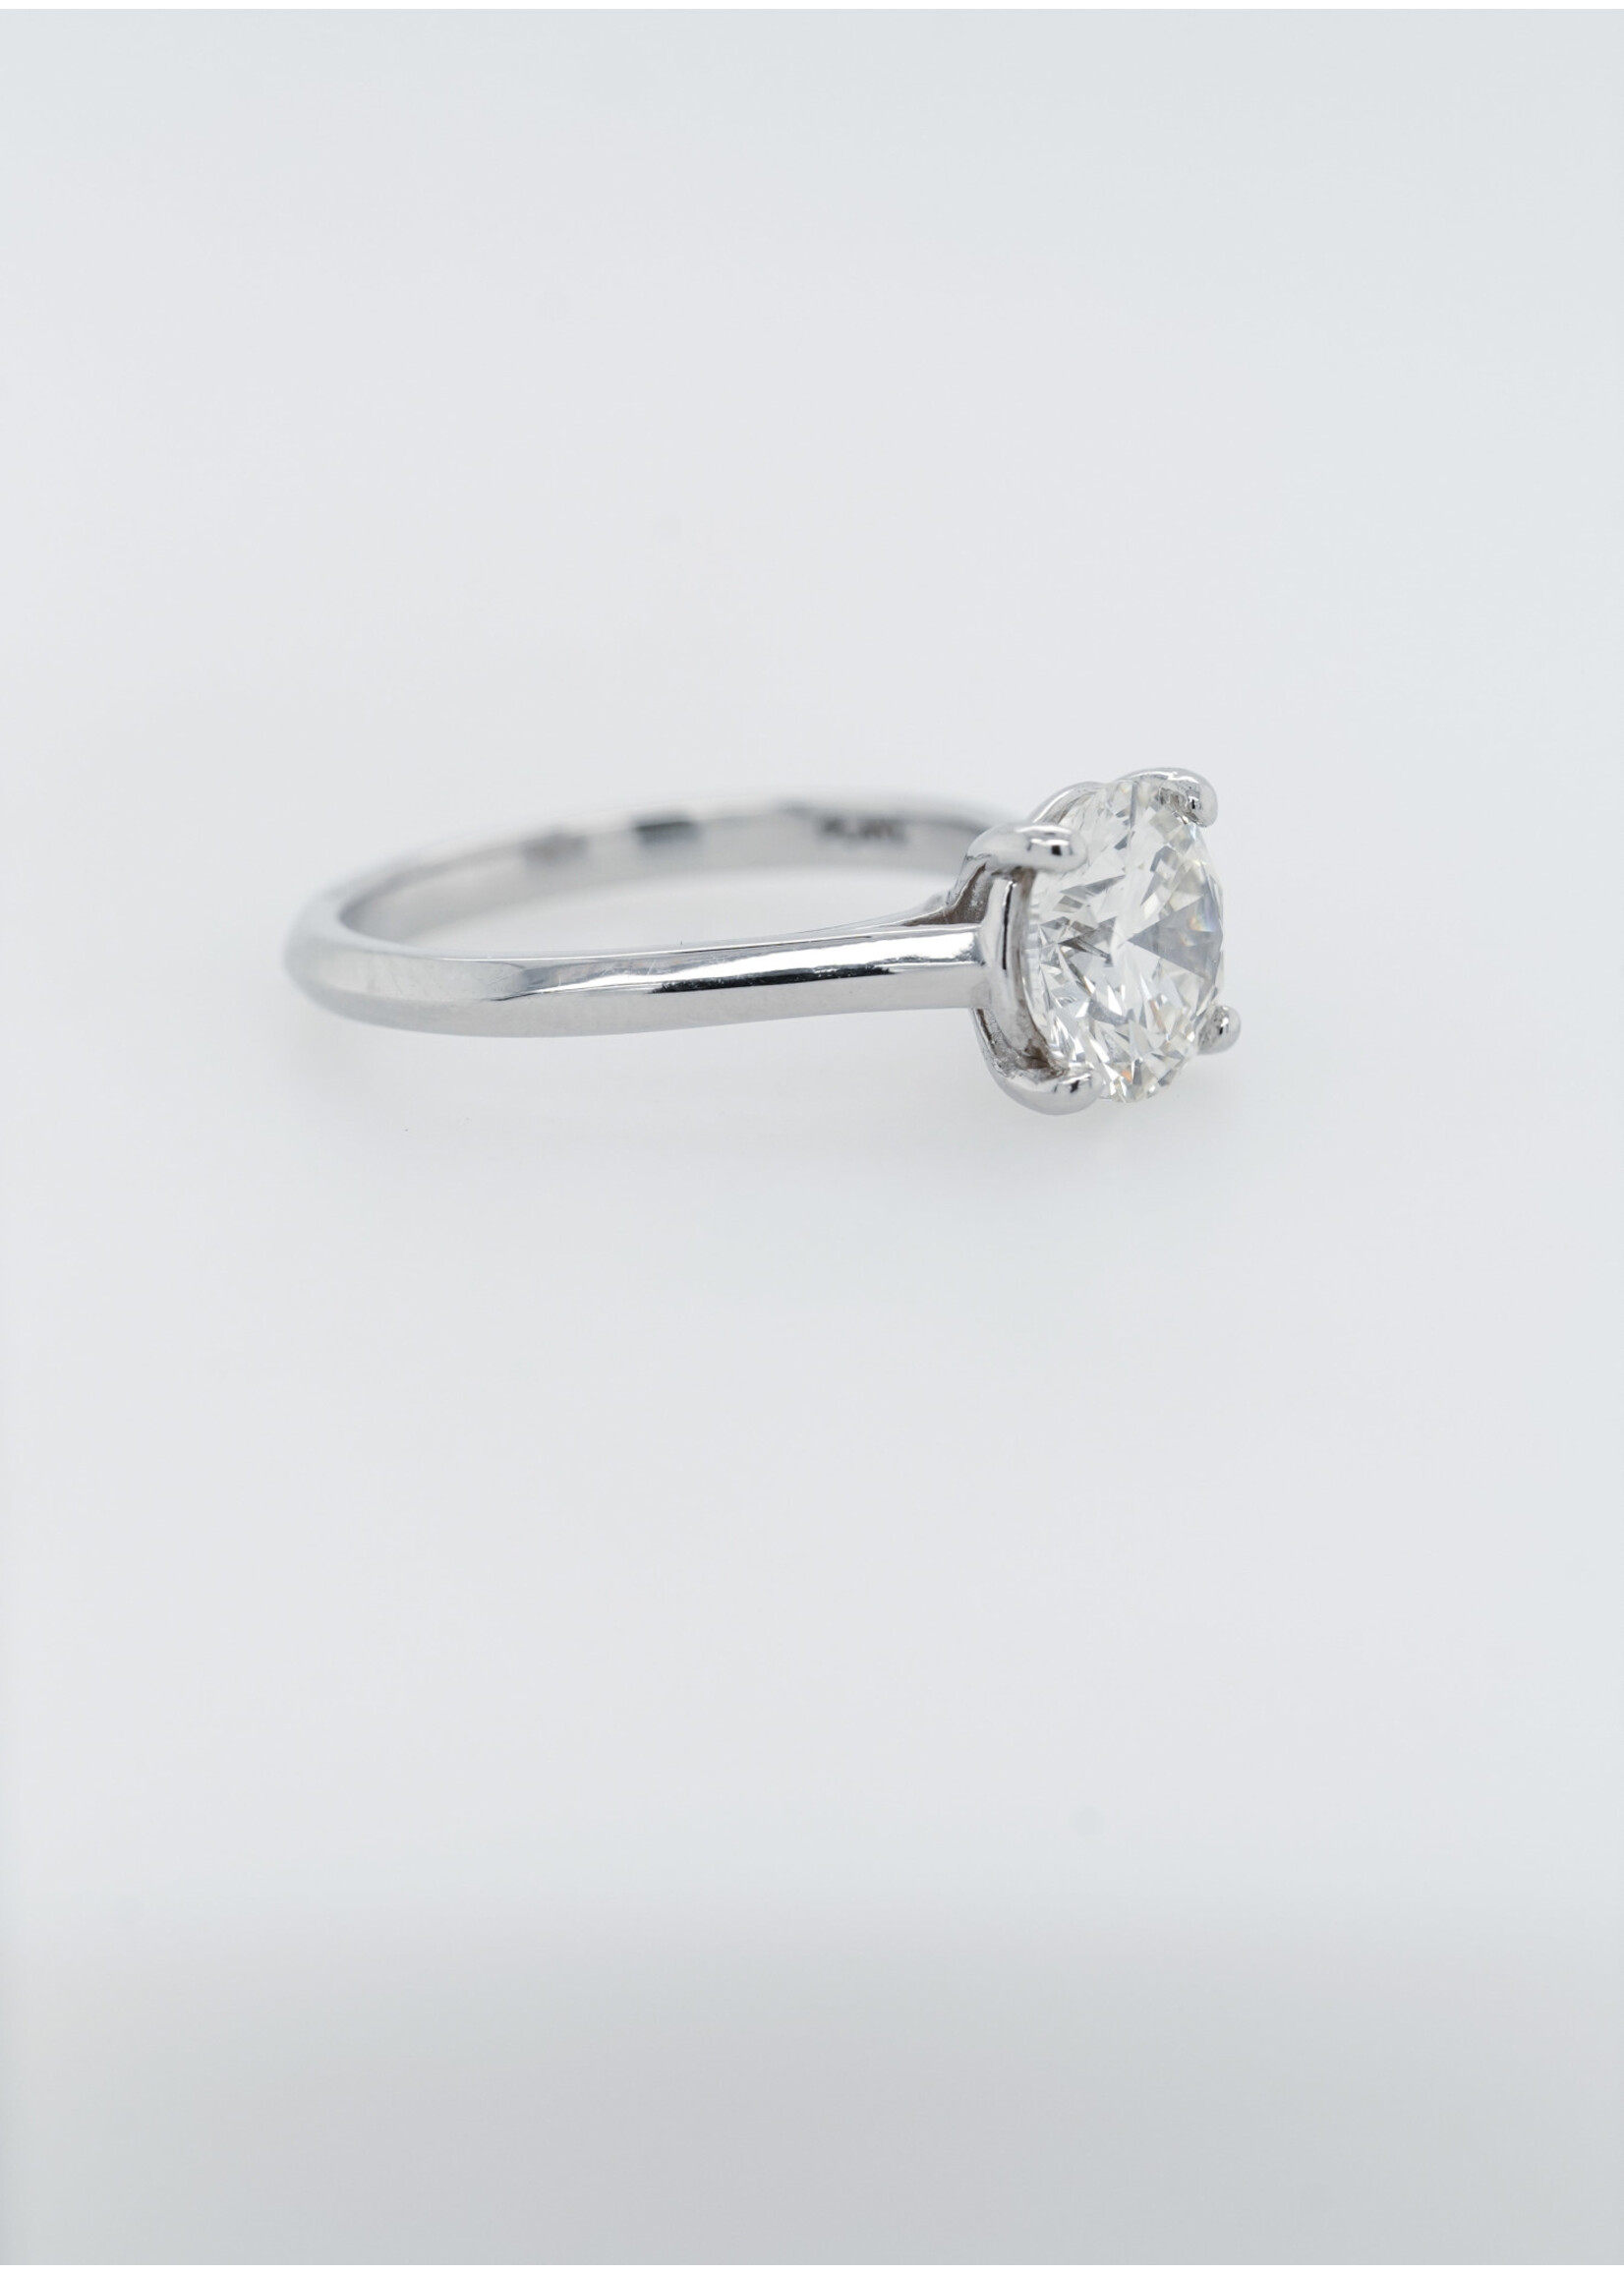 Platinum 5.21g 2.08ct H/VS2 IGI Lab Grown Round Diamond Solitaire Engagement Ring (size 7)